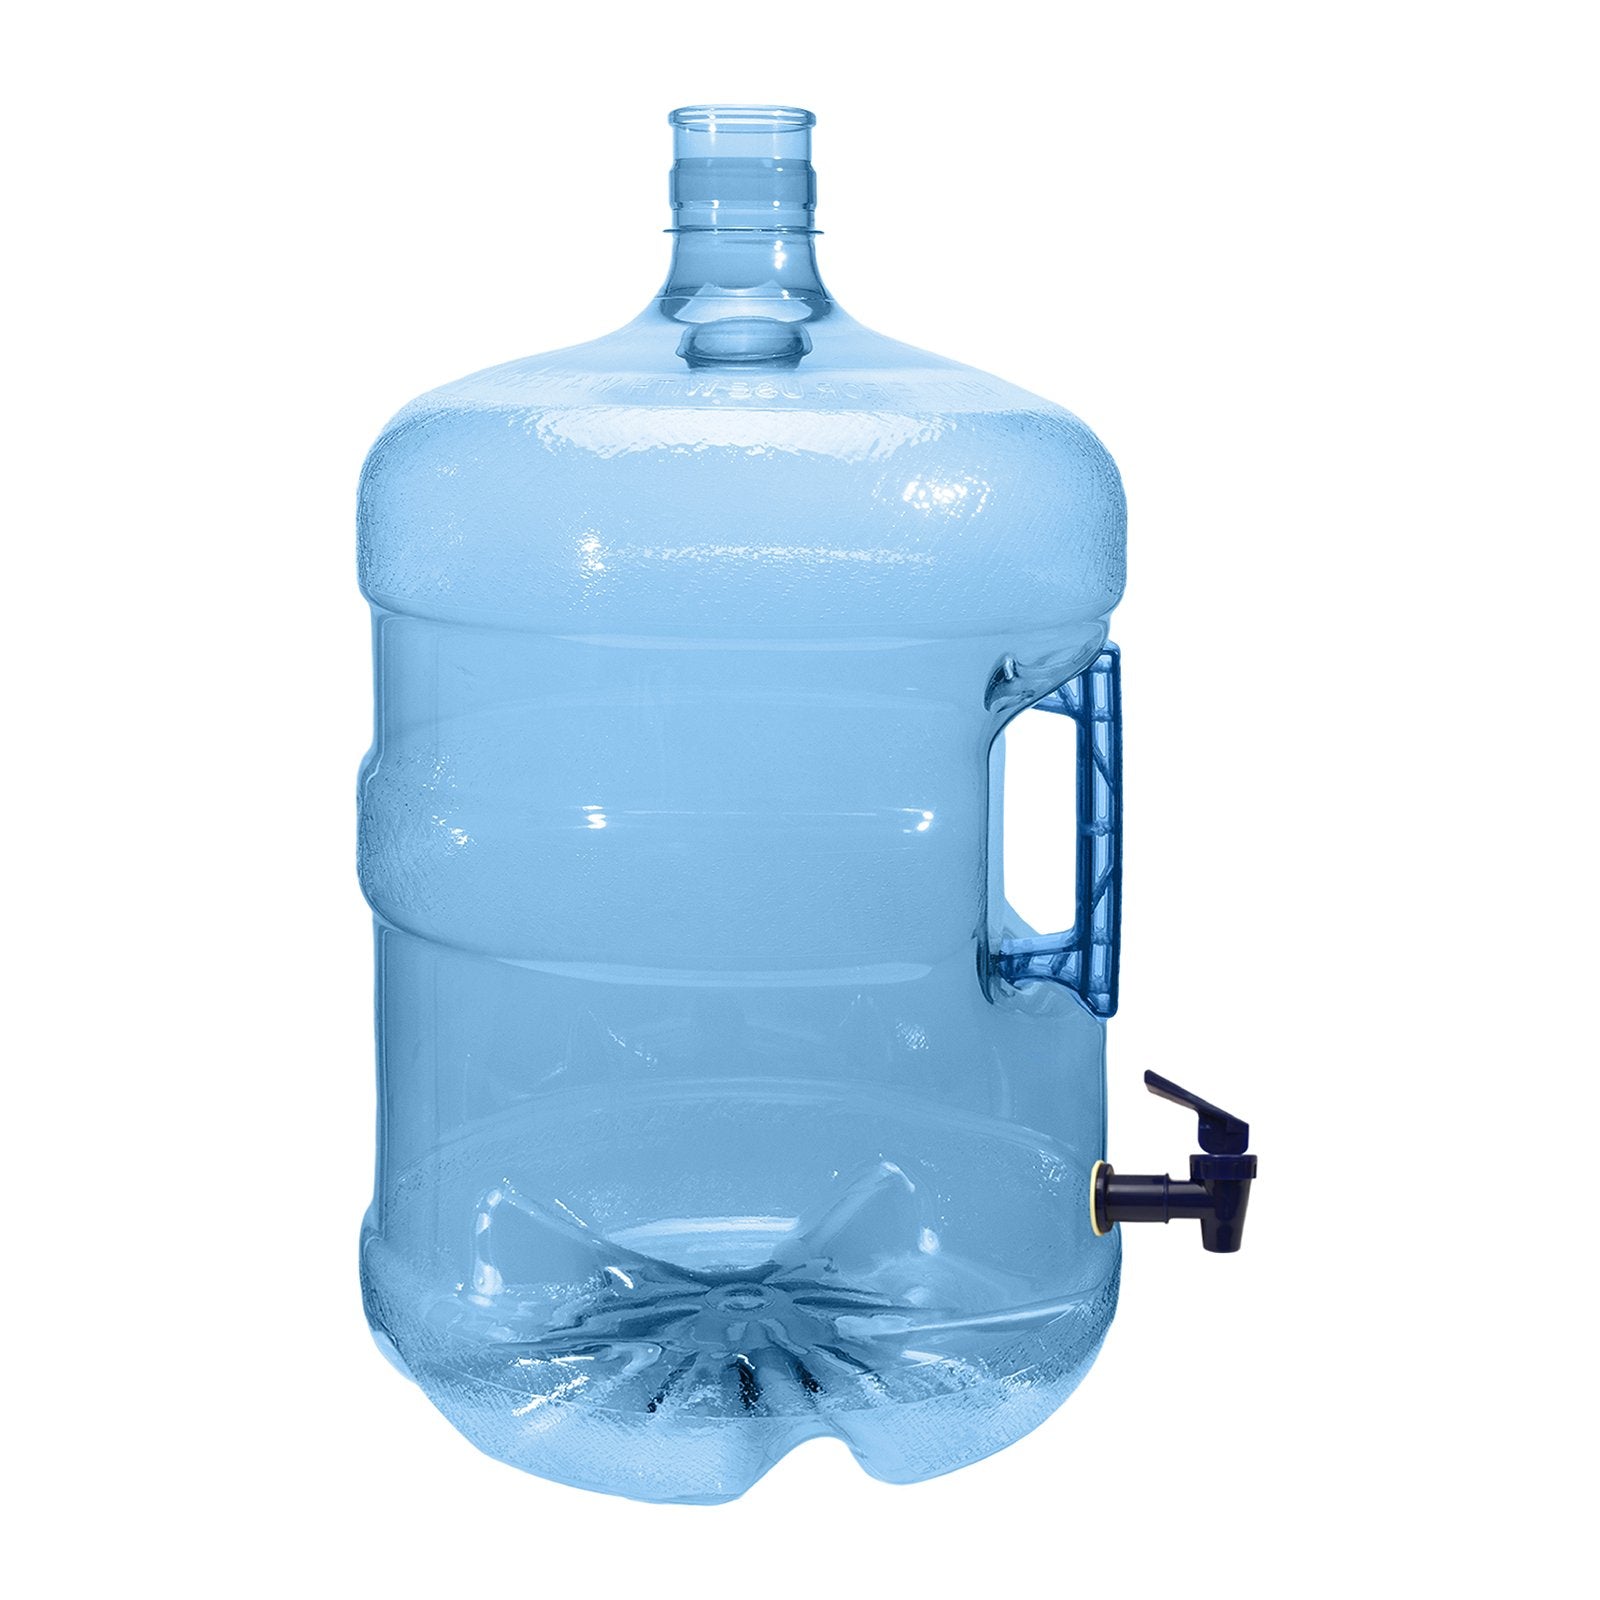 Geo 5 Gallon BPA Free Pet Plastic Crown Cap Water Bottle Container Jug